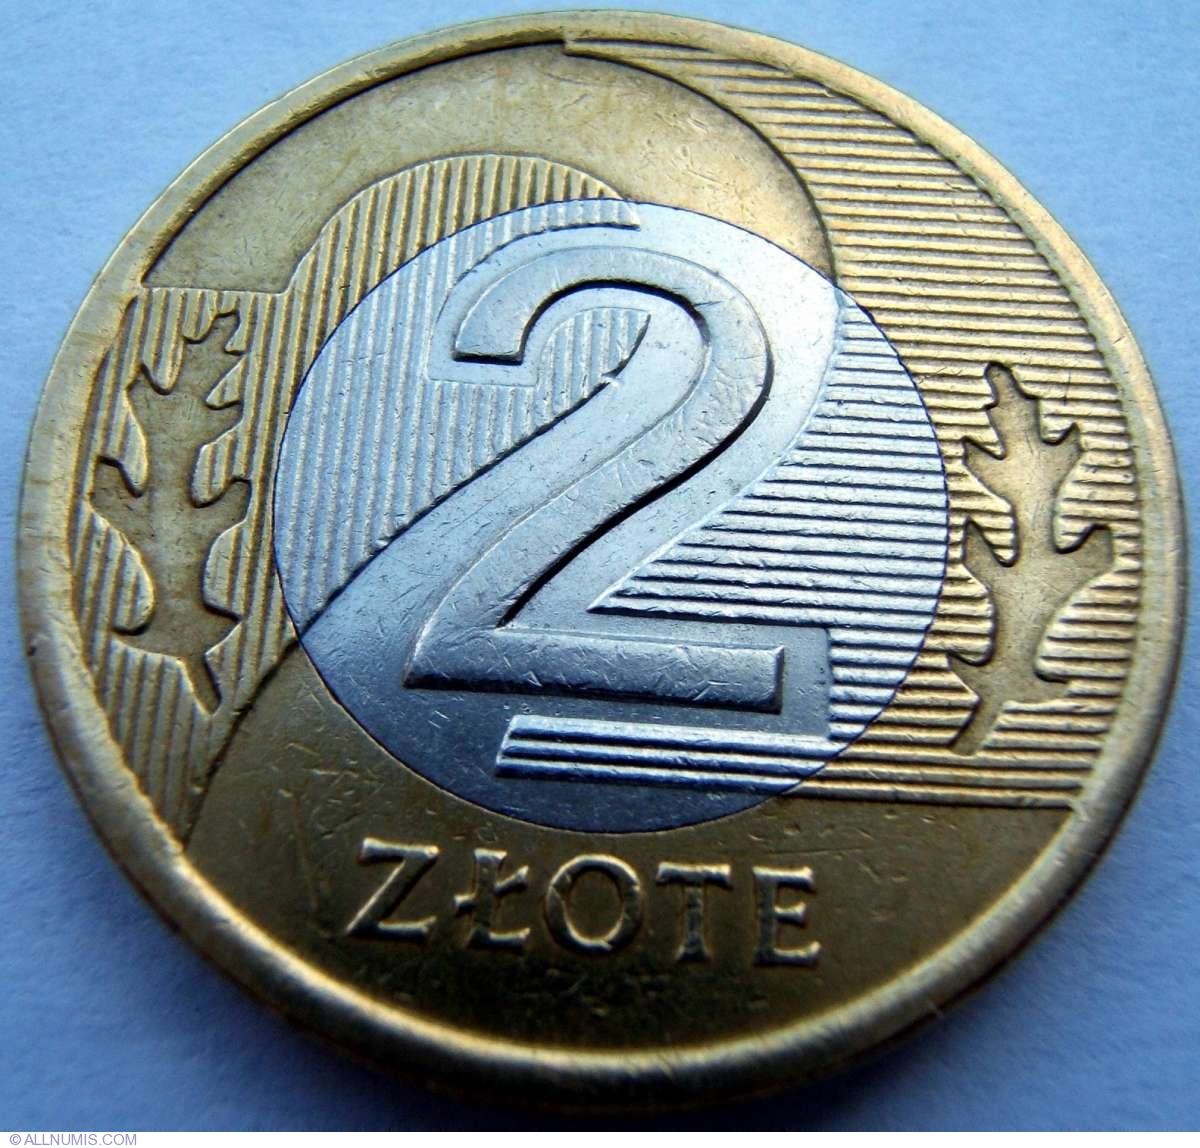 2-zlote-1995-1994-2017-issue-2-z-ote-poland-coin-589